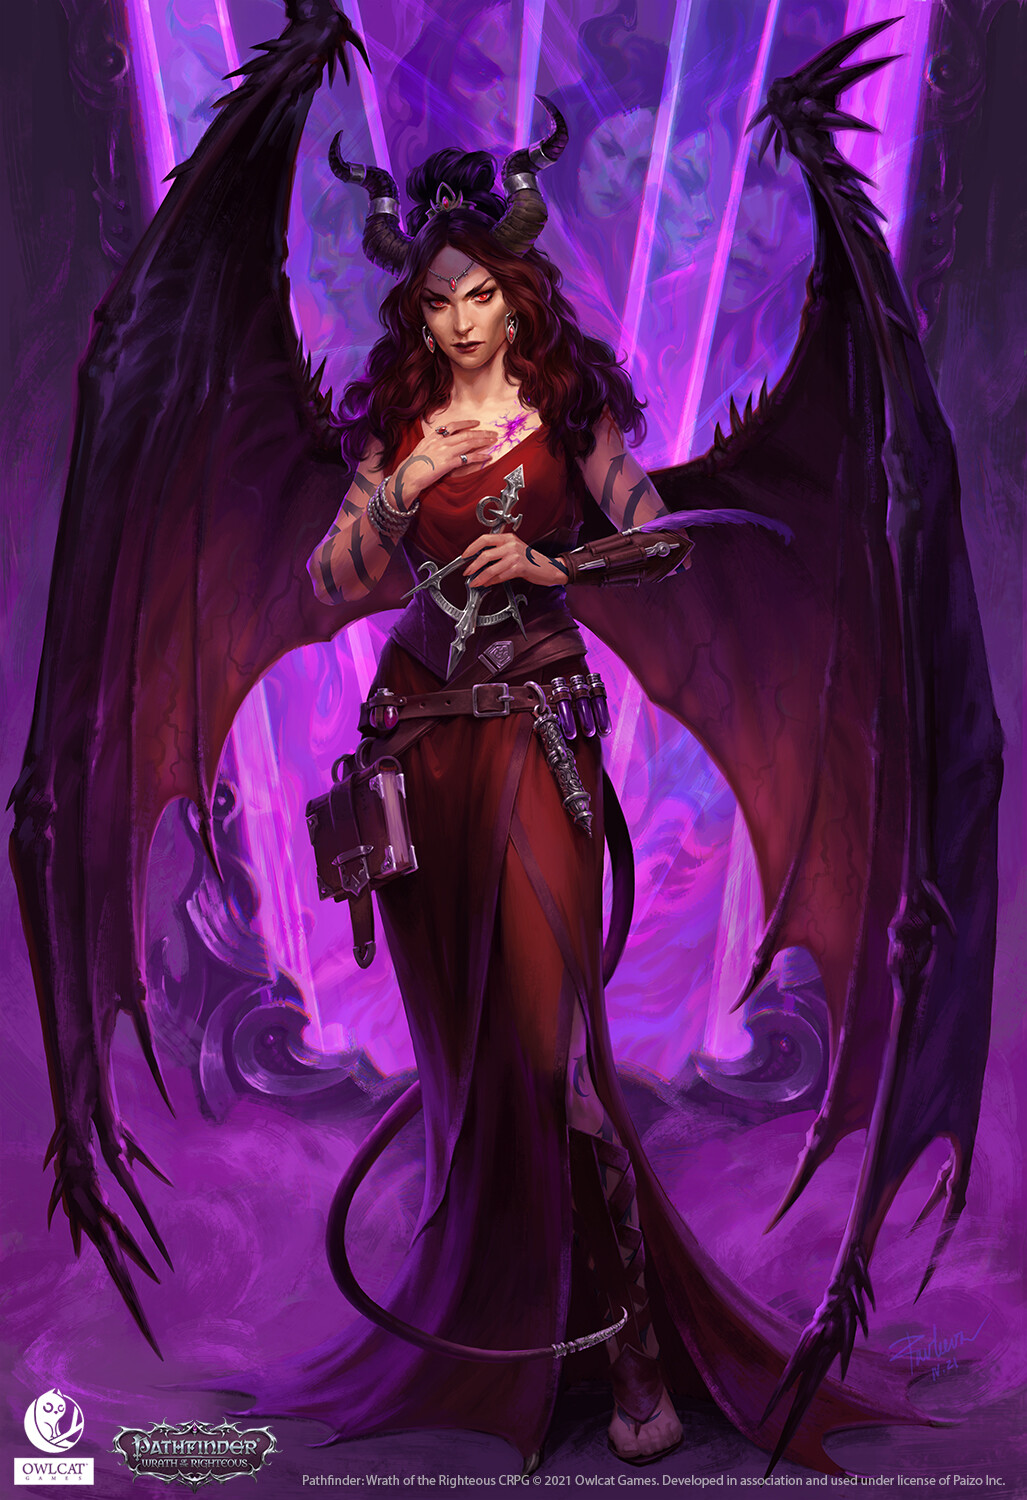 General 1027x1500 Anna Pavleeva artwork women fantasy girl fantasy art horns wings red dress red clothing long hair red eyes 2021 (year)